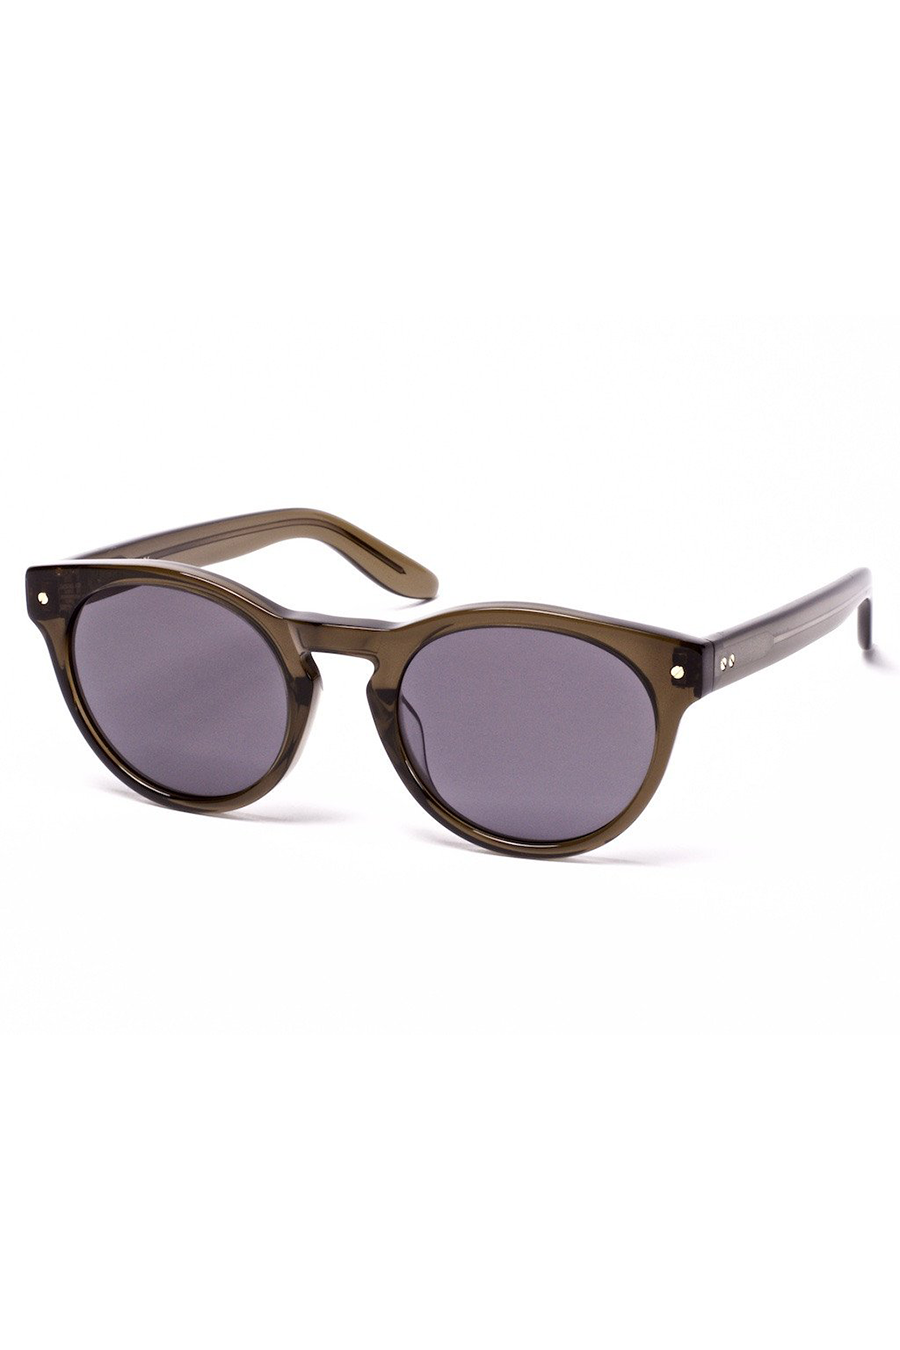 Gaviota Sunglasses | Moss - Polarized - Main Image Number 1 of 3